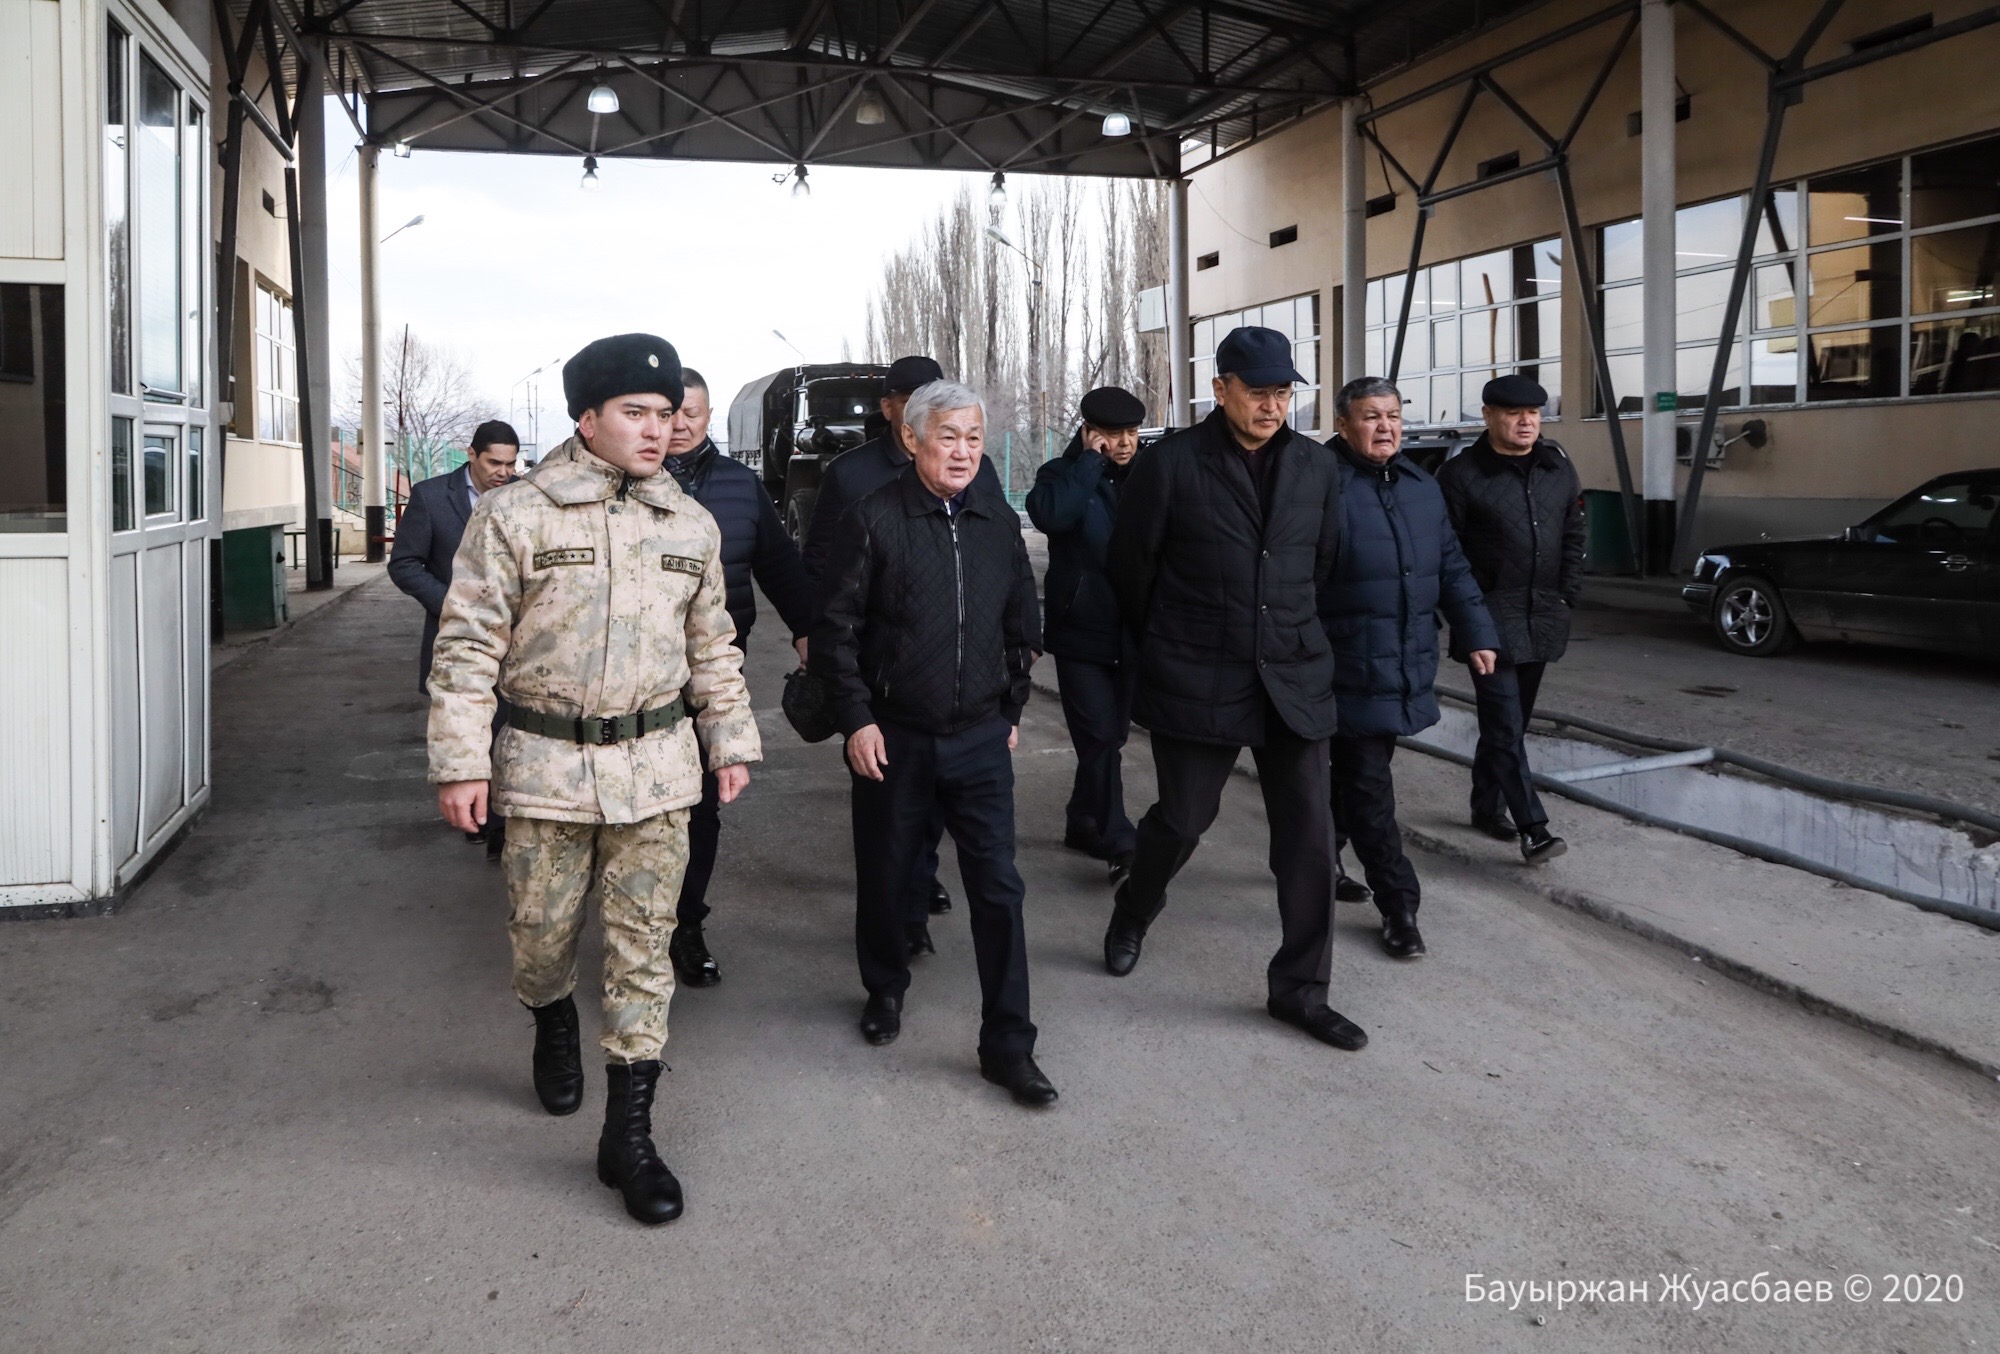 All destroyed houses to be restored — Berdibek Saparbayev